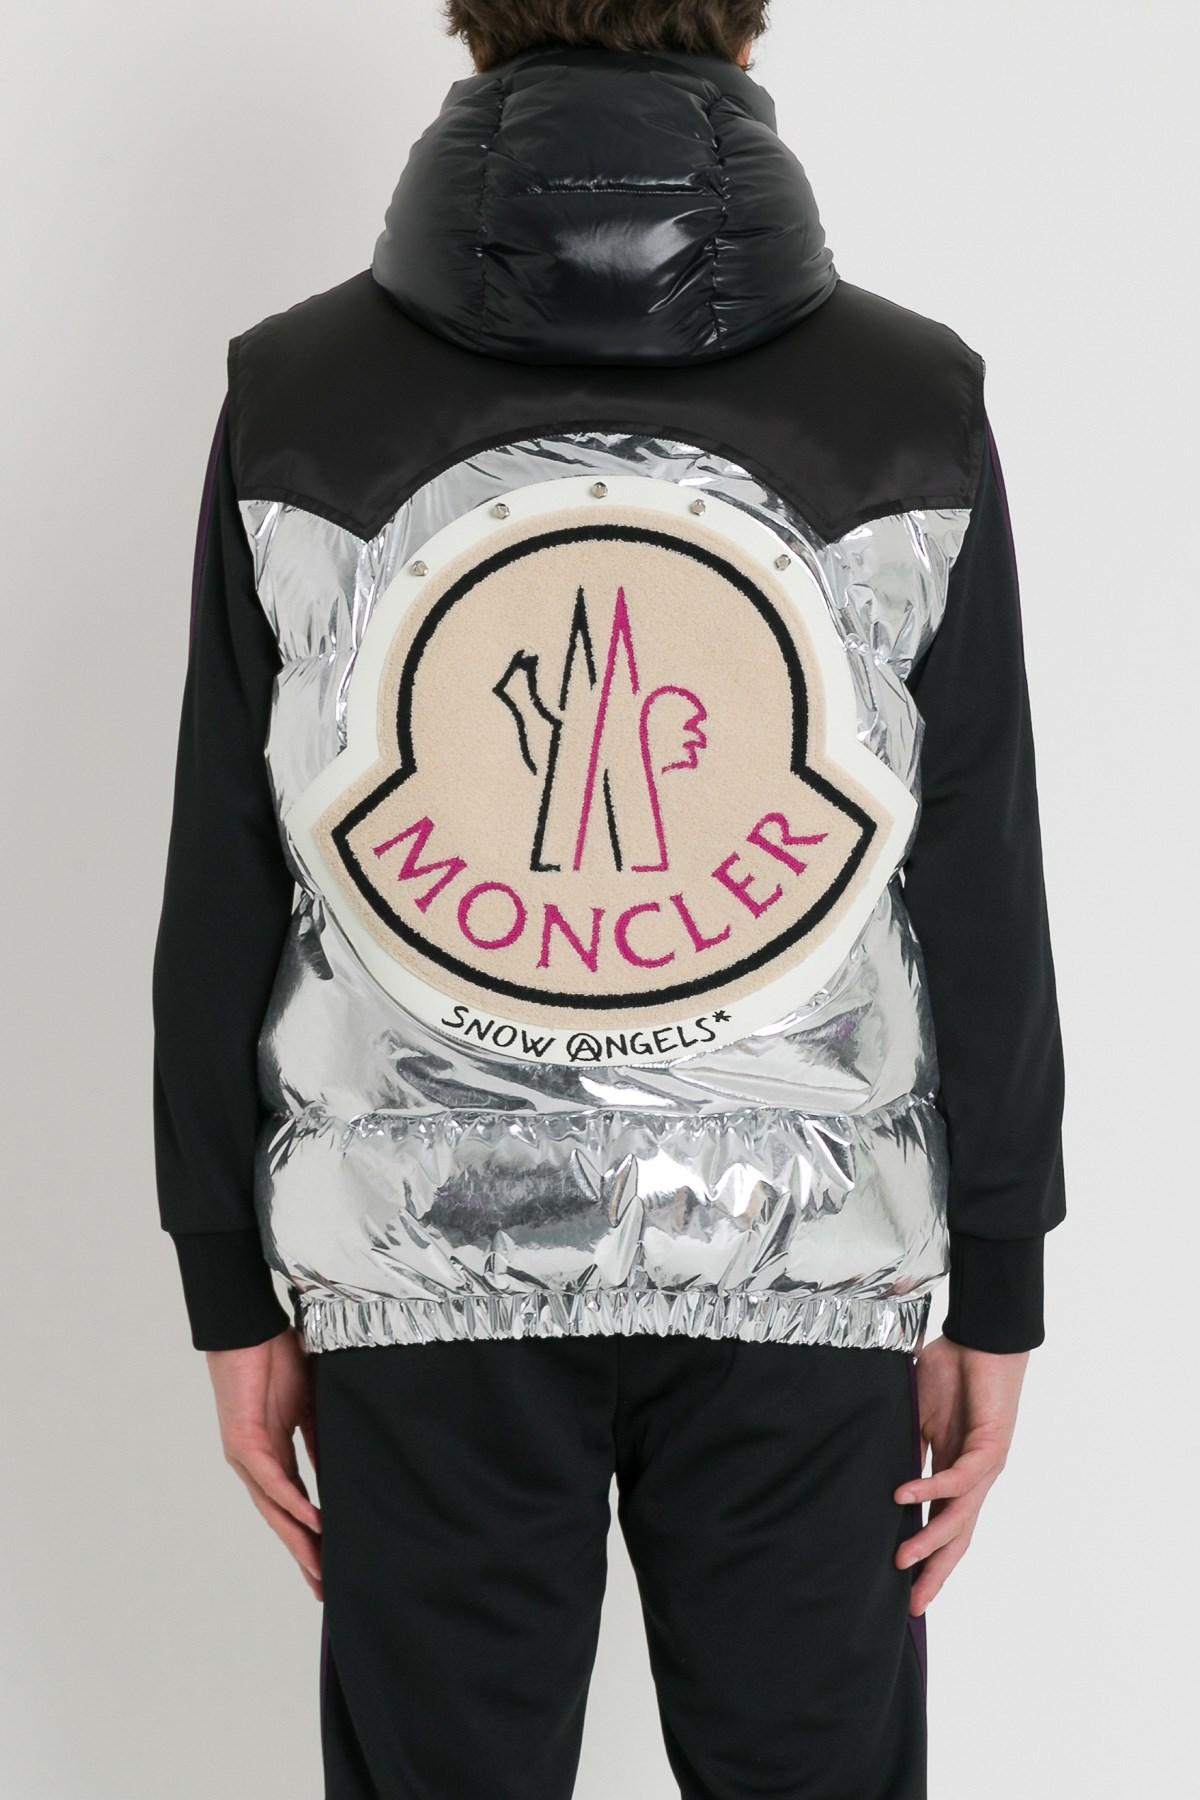 Moncler Genius Synthetic 8 Moncler Palm Angels Silver And Black Exen Vest  for Men - Lyst